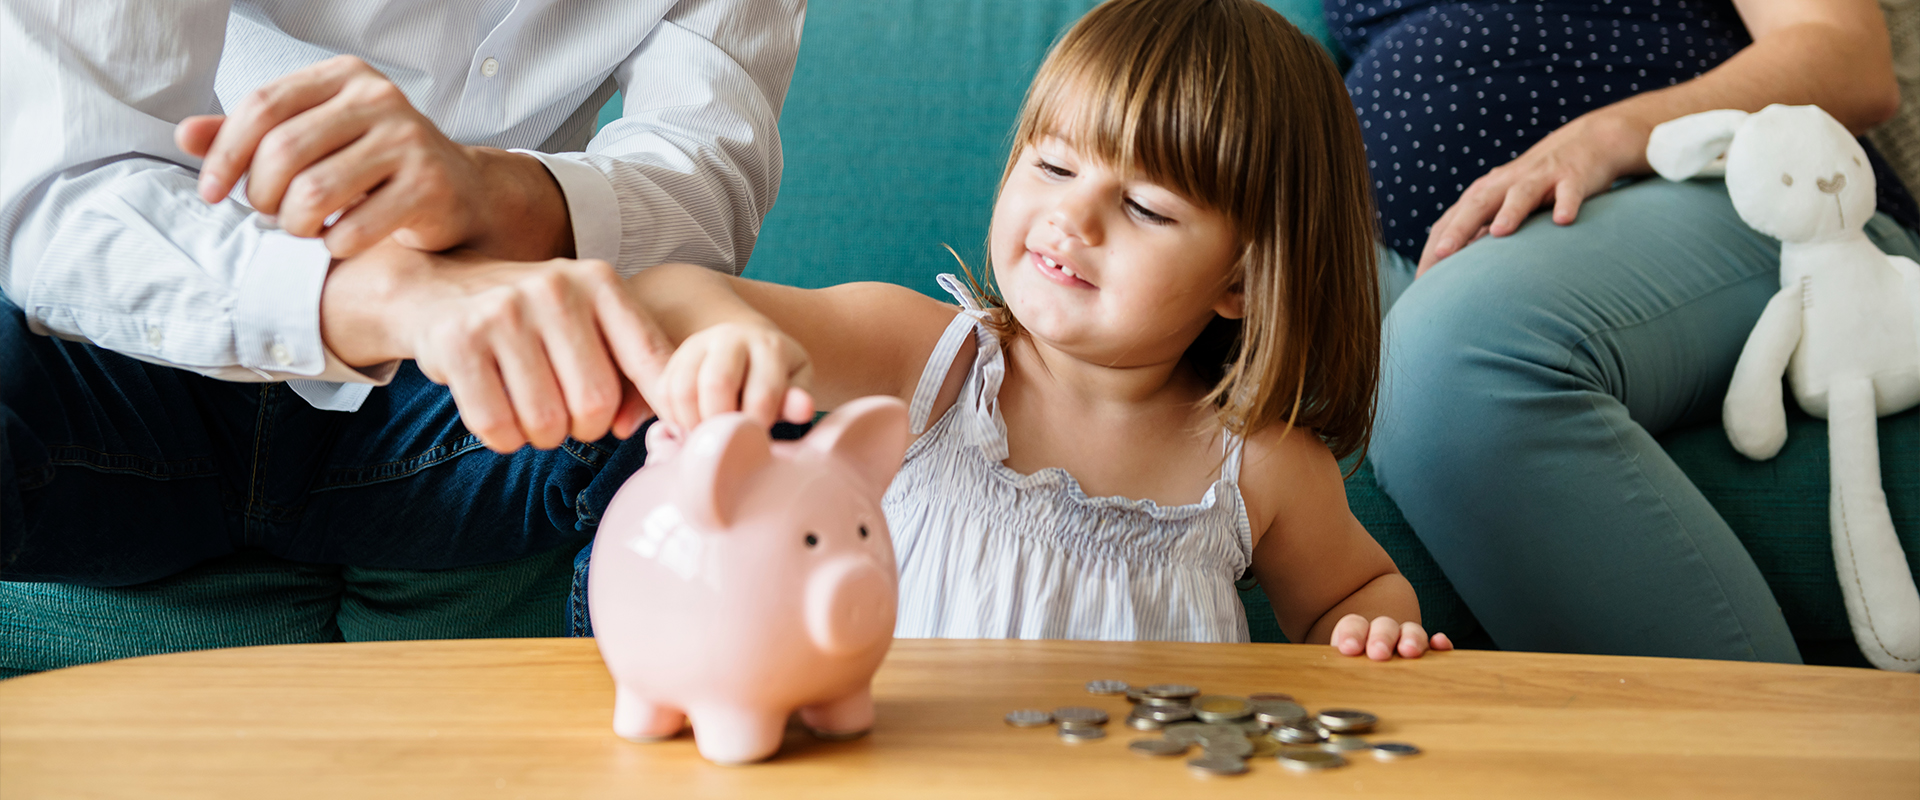 little girl putting coins in a piggybank